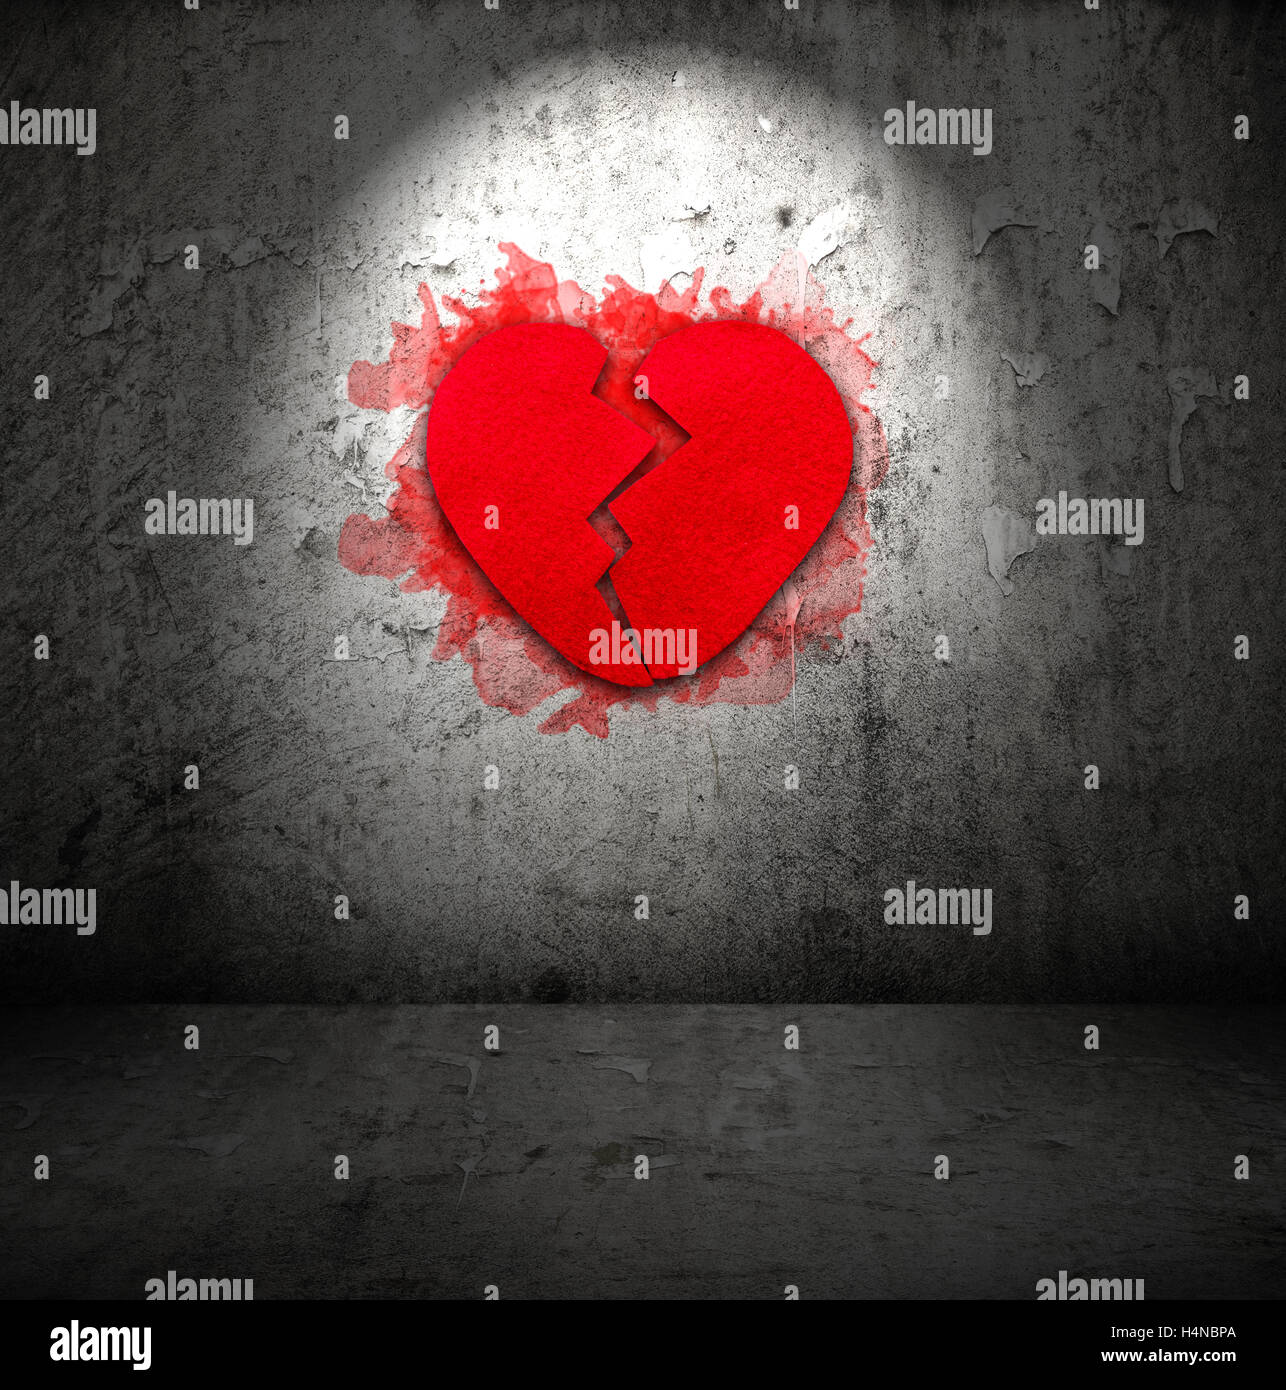 Red broken heart bleeding on abstract dark cement background Stock Photo